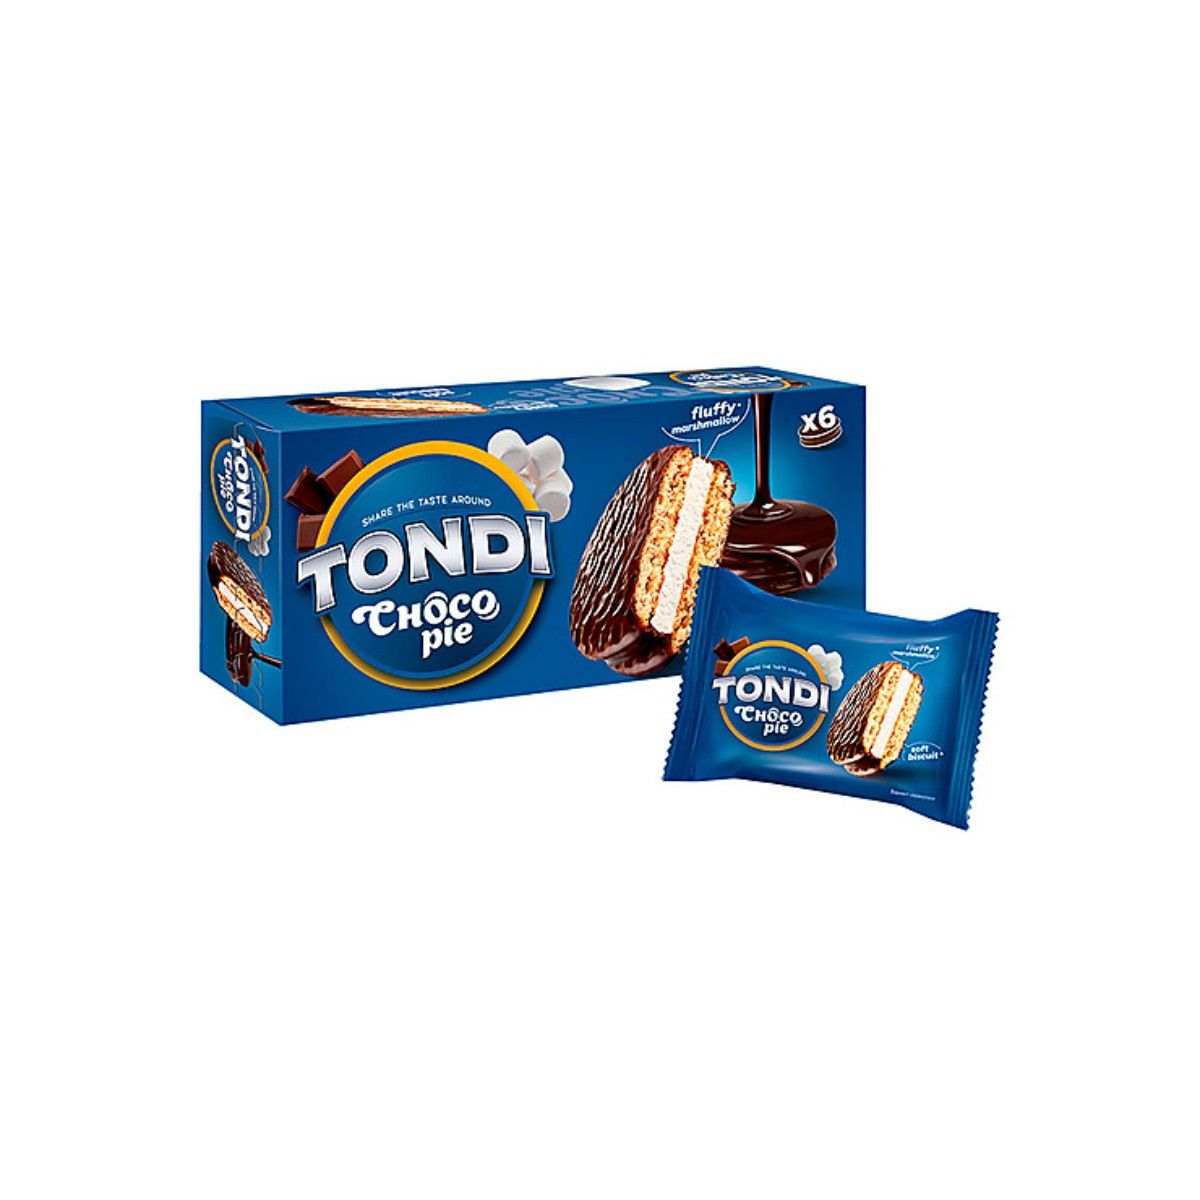 Бел пай. «Tondi», Choco pie, 180 г. Скрепыши печенье Choco pie глазированное 180г. Tondi Choco pie купить.